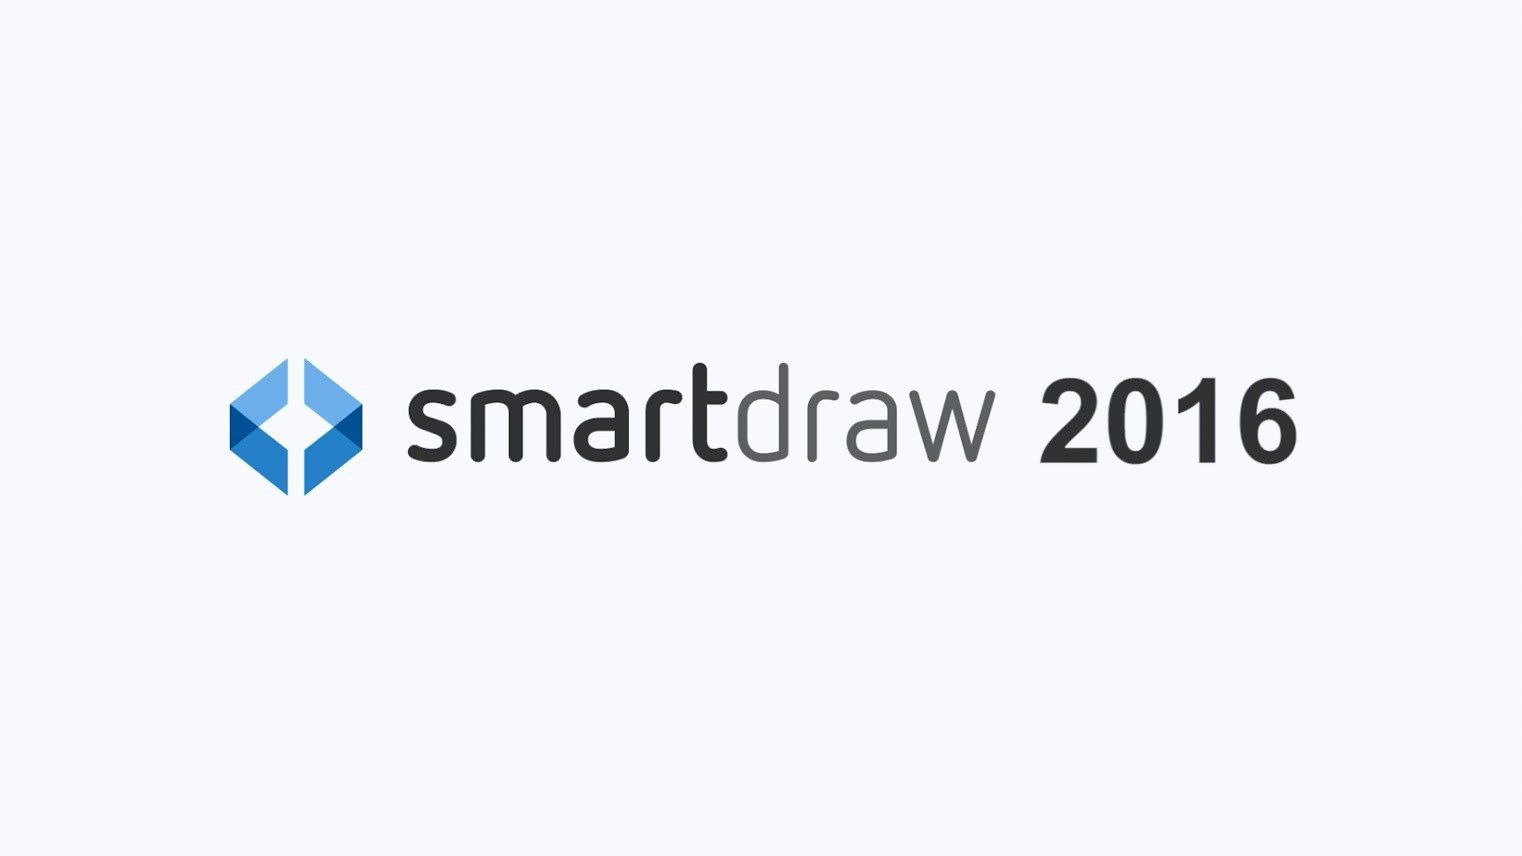 smartdraw 2014 full version free download crack for windows